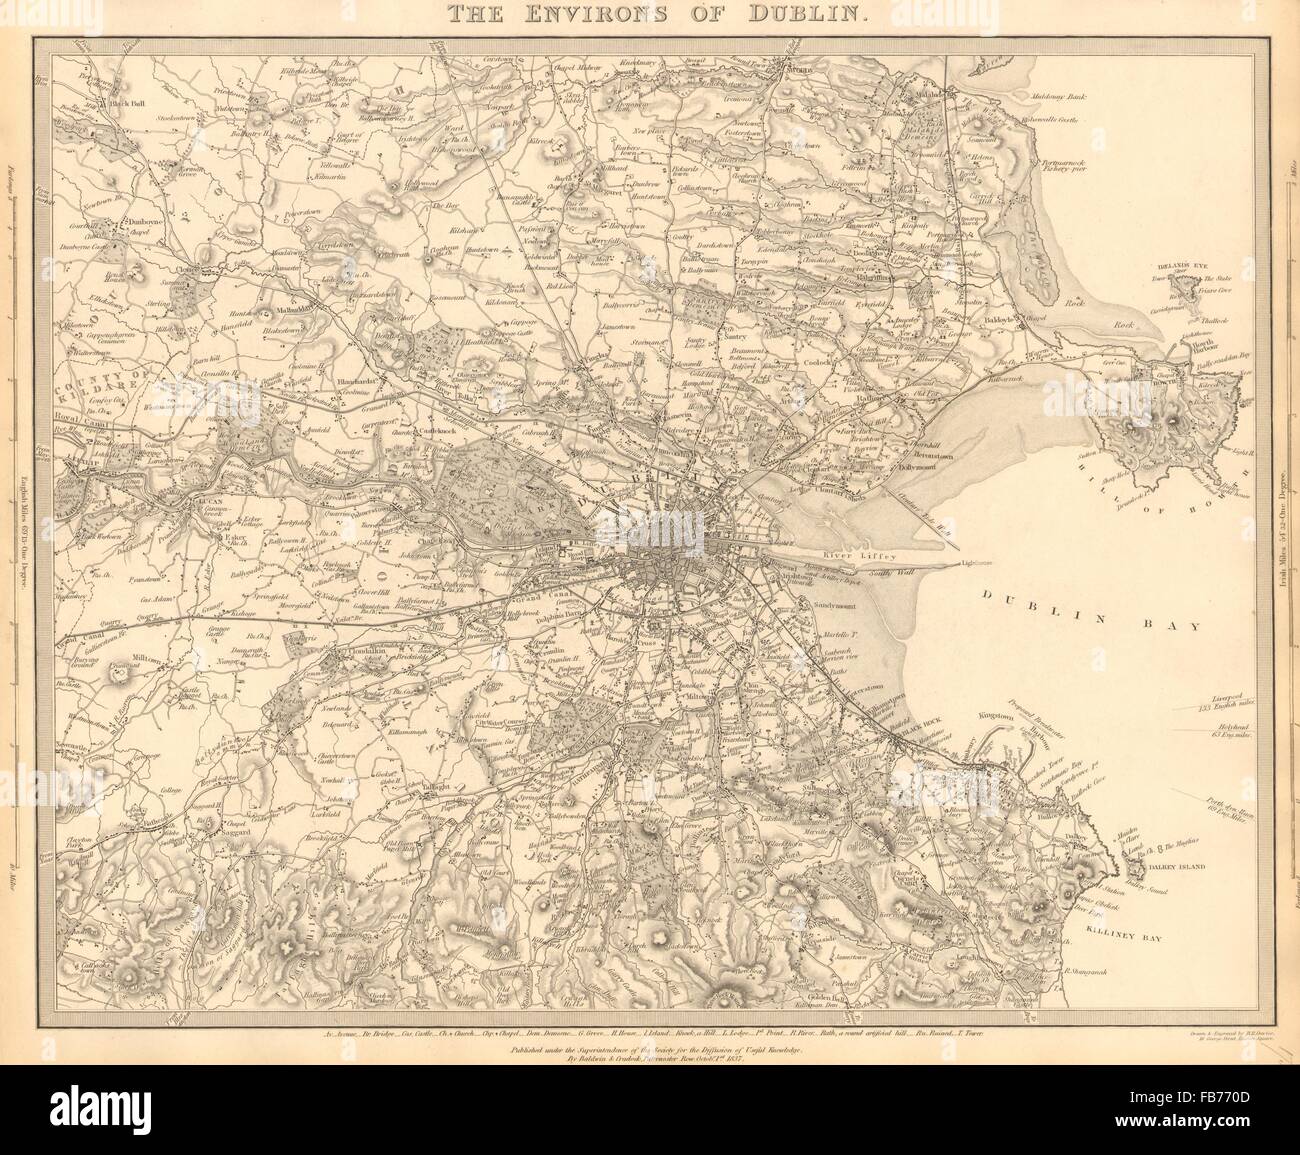 IRELAND: The environs of Dublin. SDUK, 1848 antique map Stock Photo